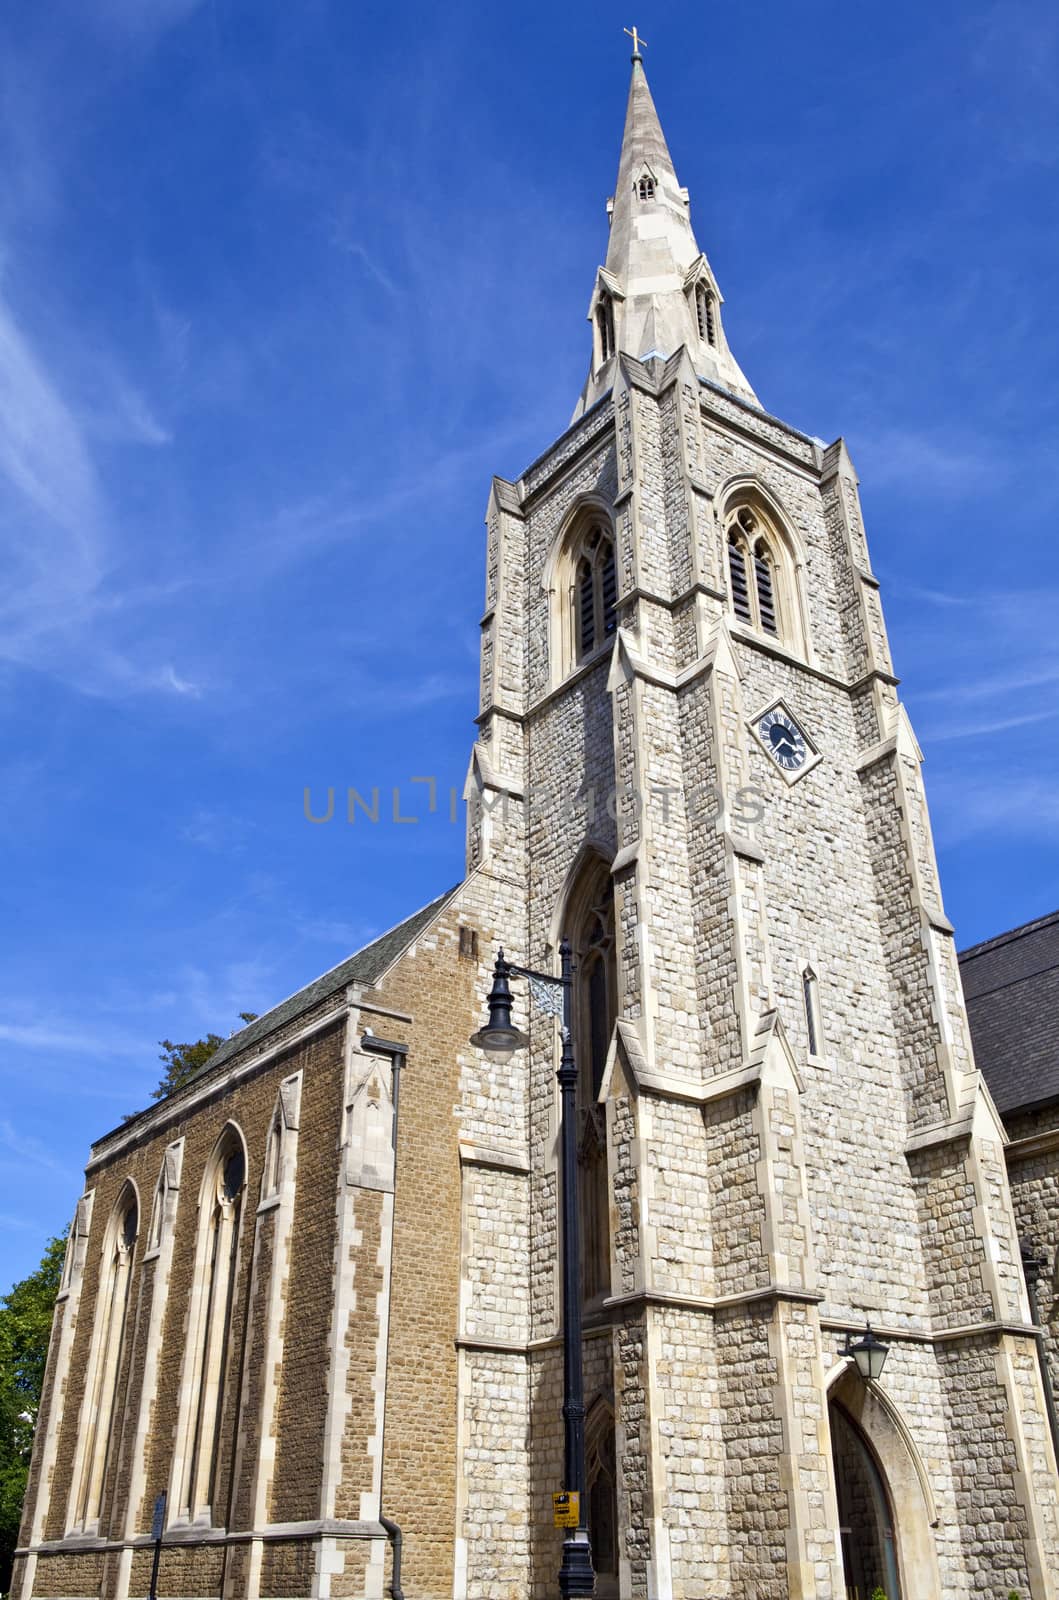 St. Michael's Church in Belgravia, London by chrisdorney